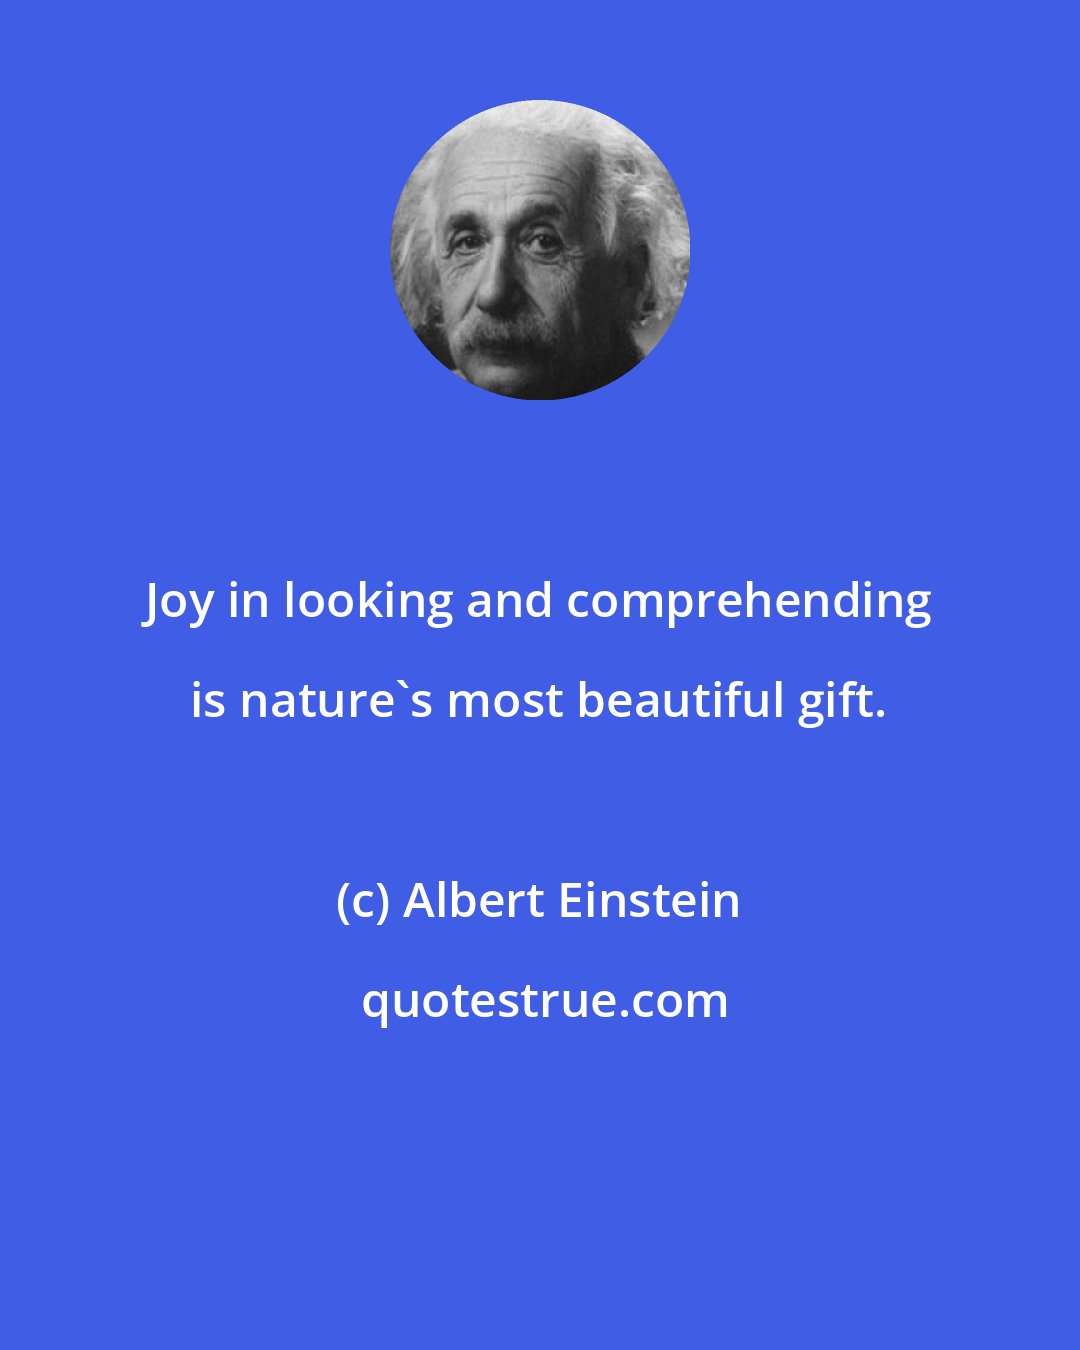 Albert Einstein: Joy in looking and comprehending is nature's most beautiful gift.